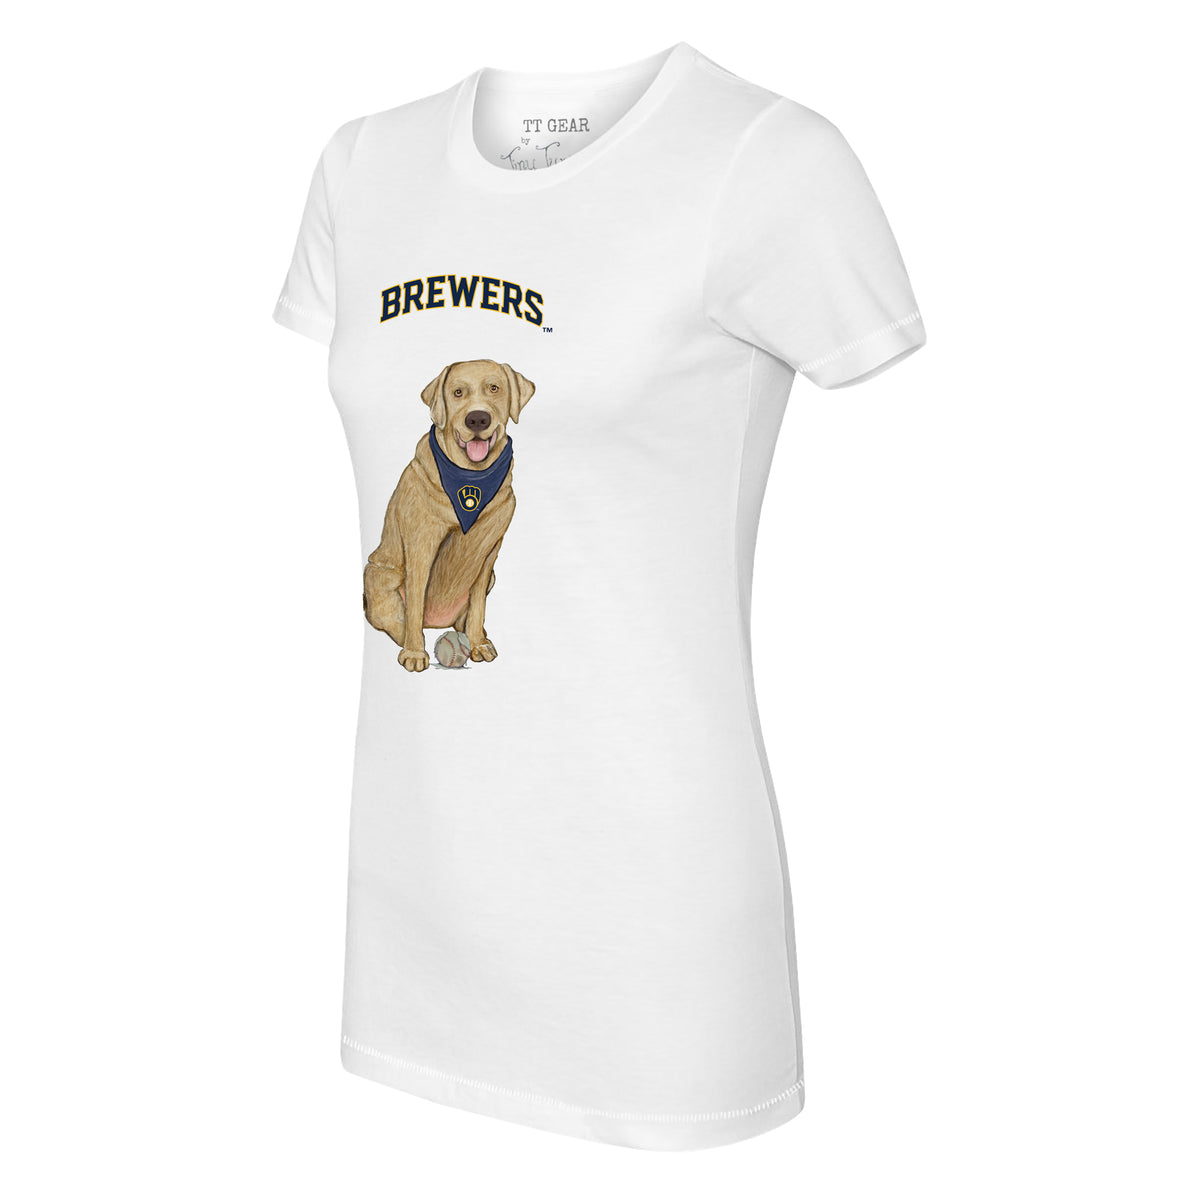 Milwaukee Brewers Yellow Labrador Retriever Tee Shirt